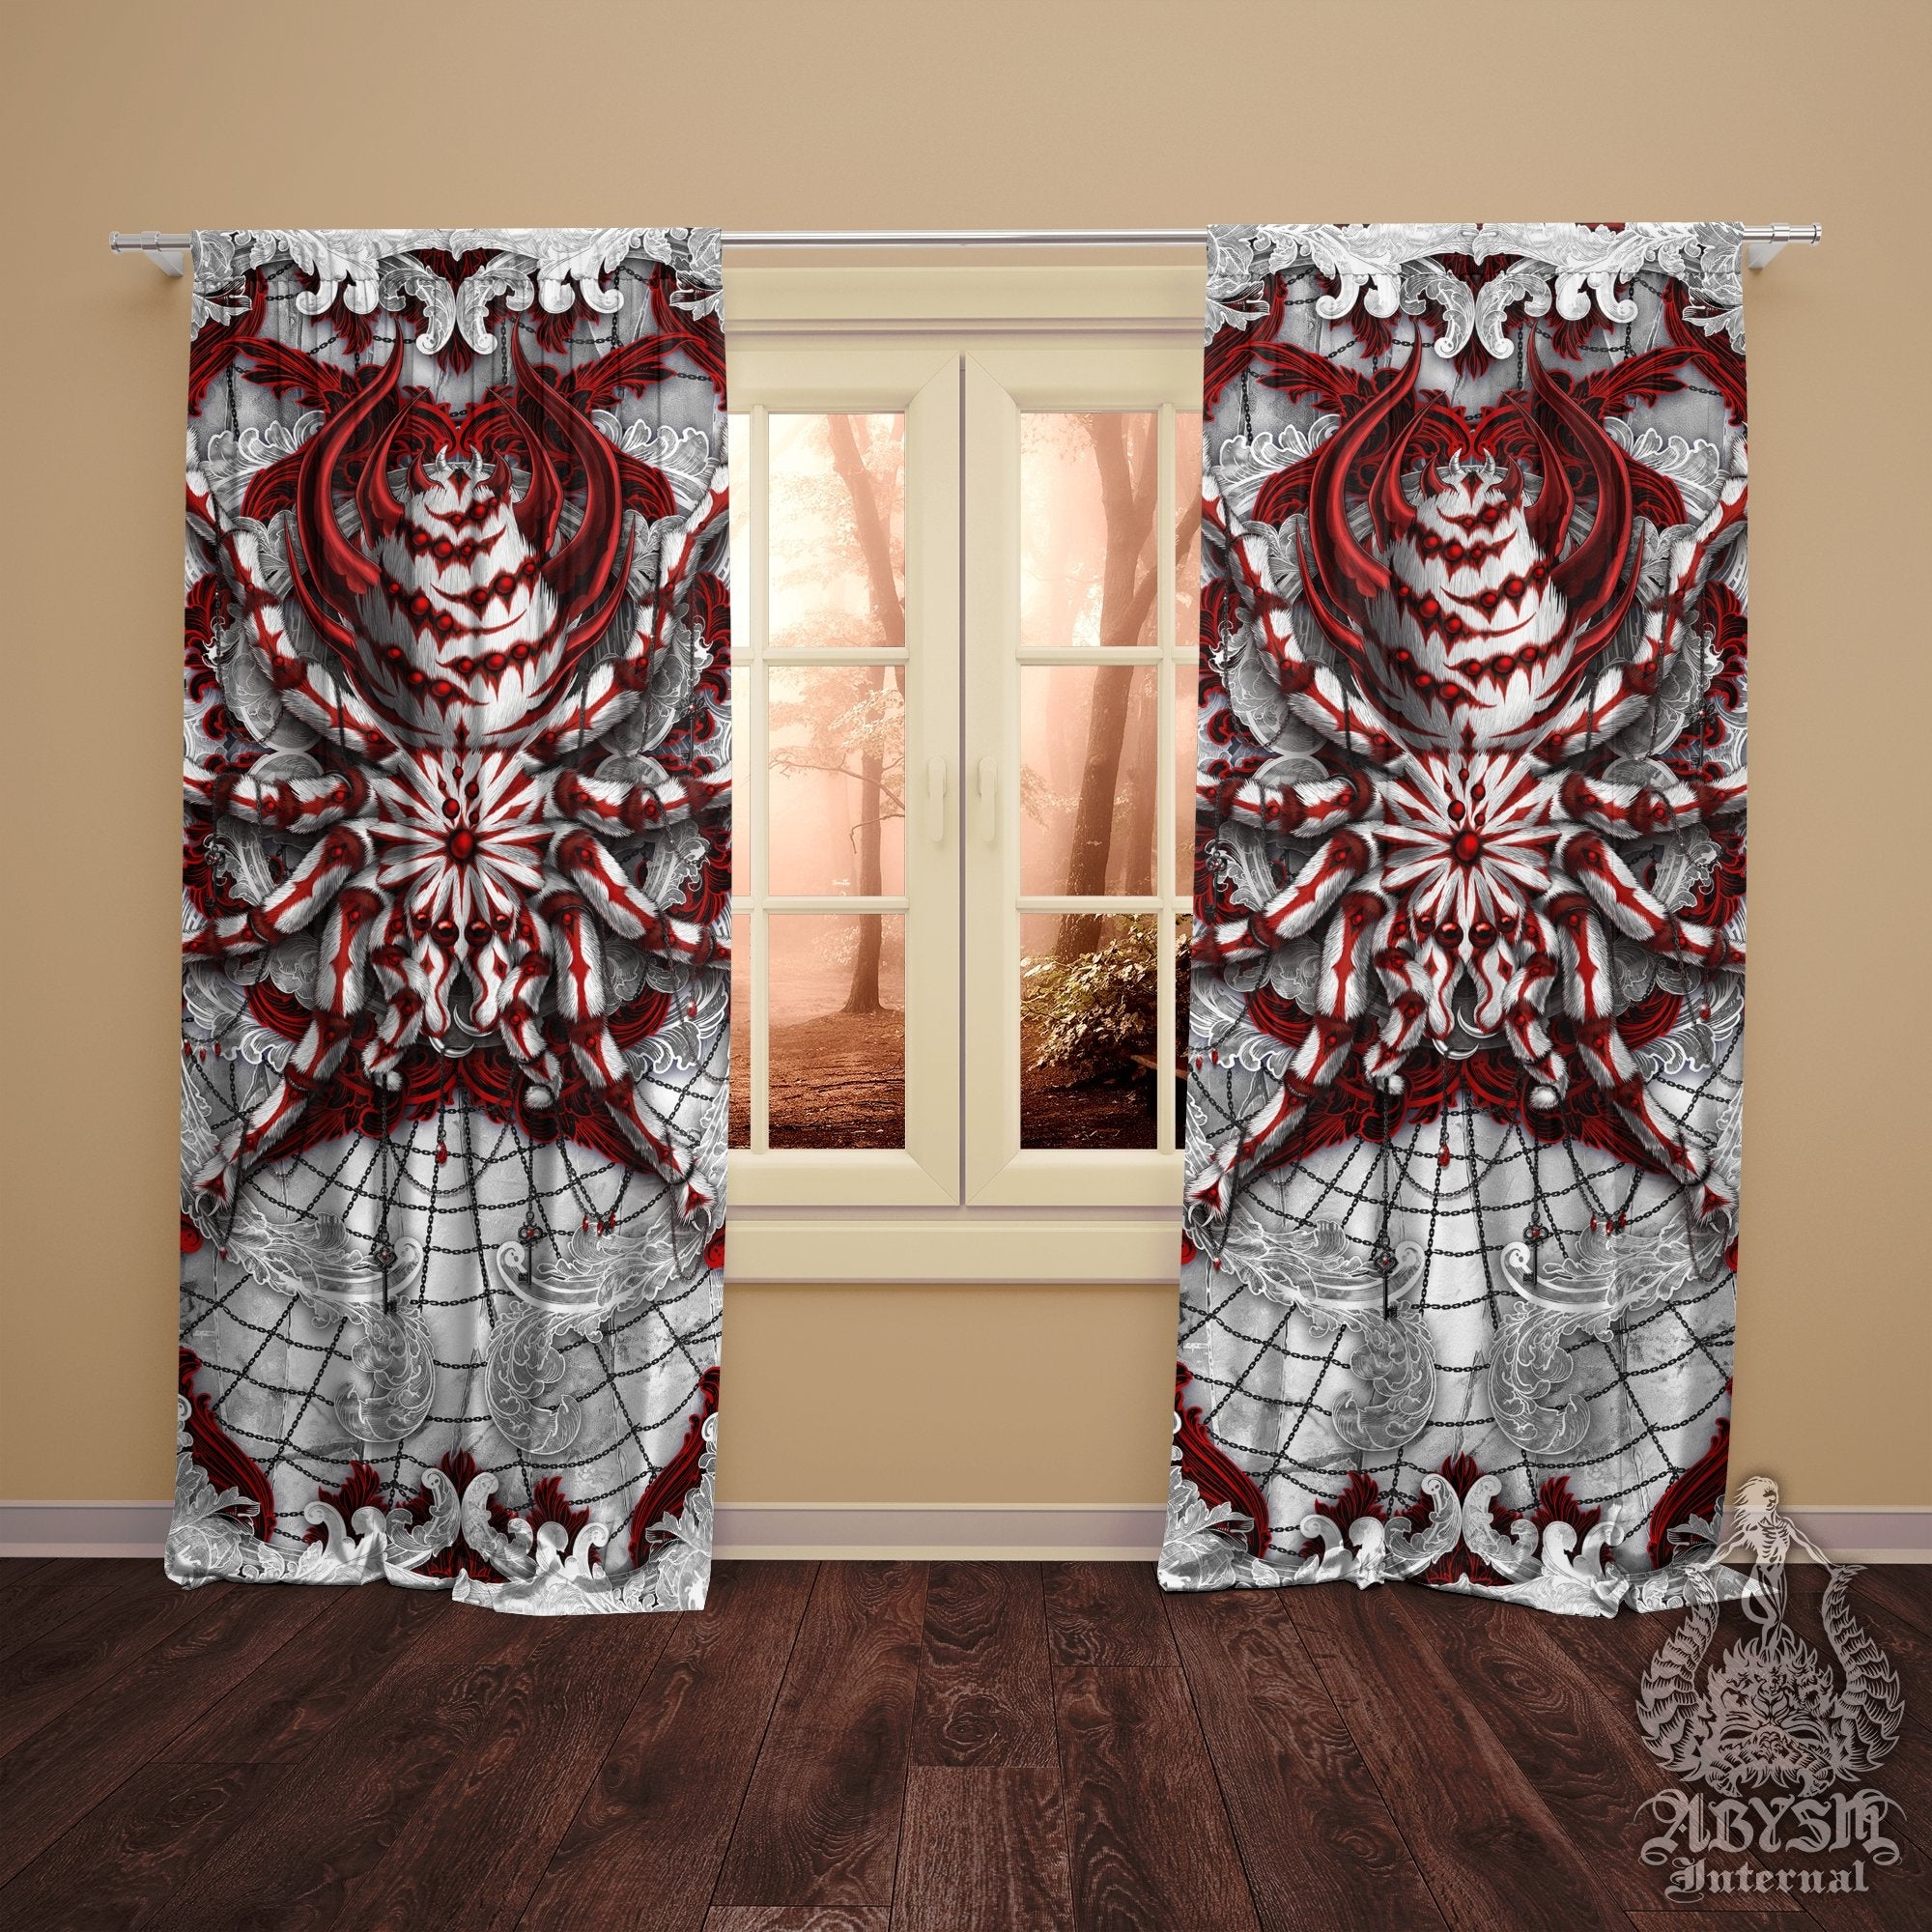 Spider Blackout Curtains, Long Window Panels, Dark Art Print, Gothic Home Decor - Tarantula, Bloody White Goth - Abysm Internal